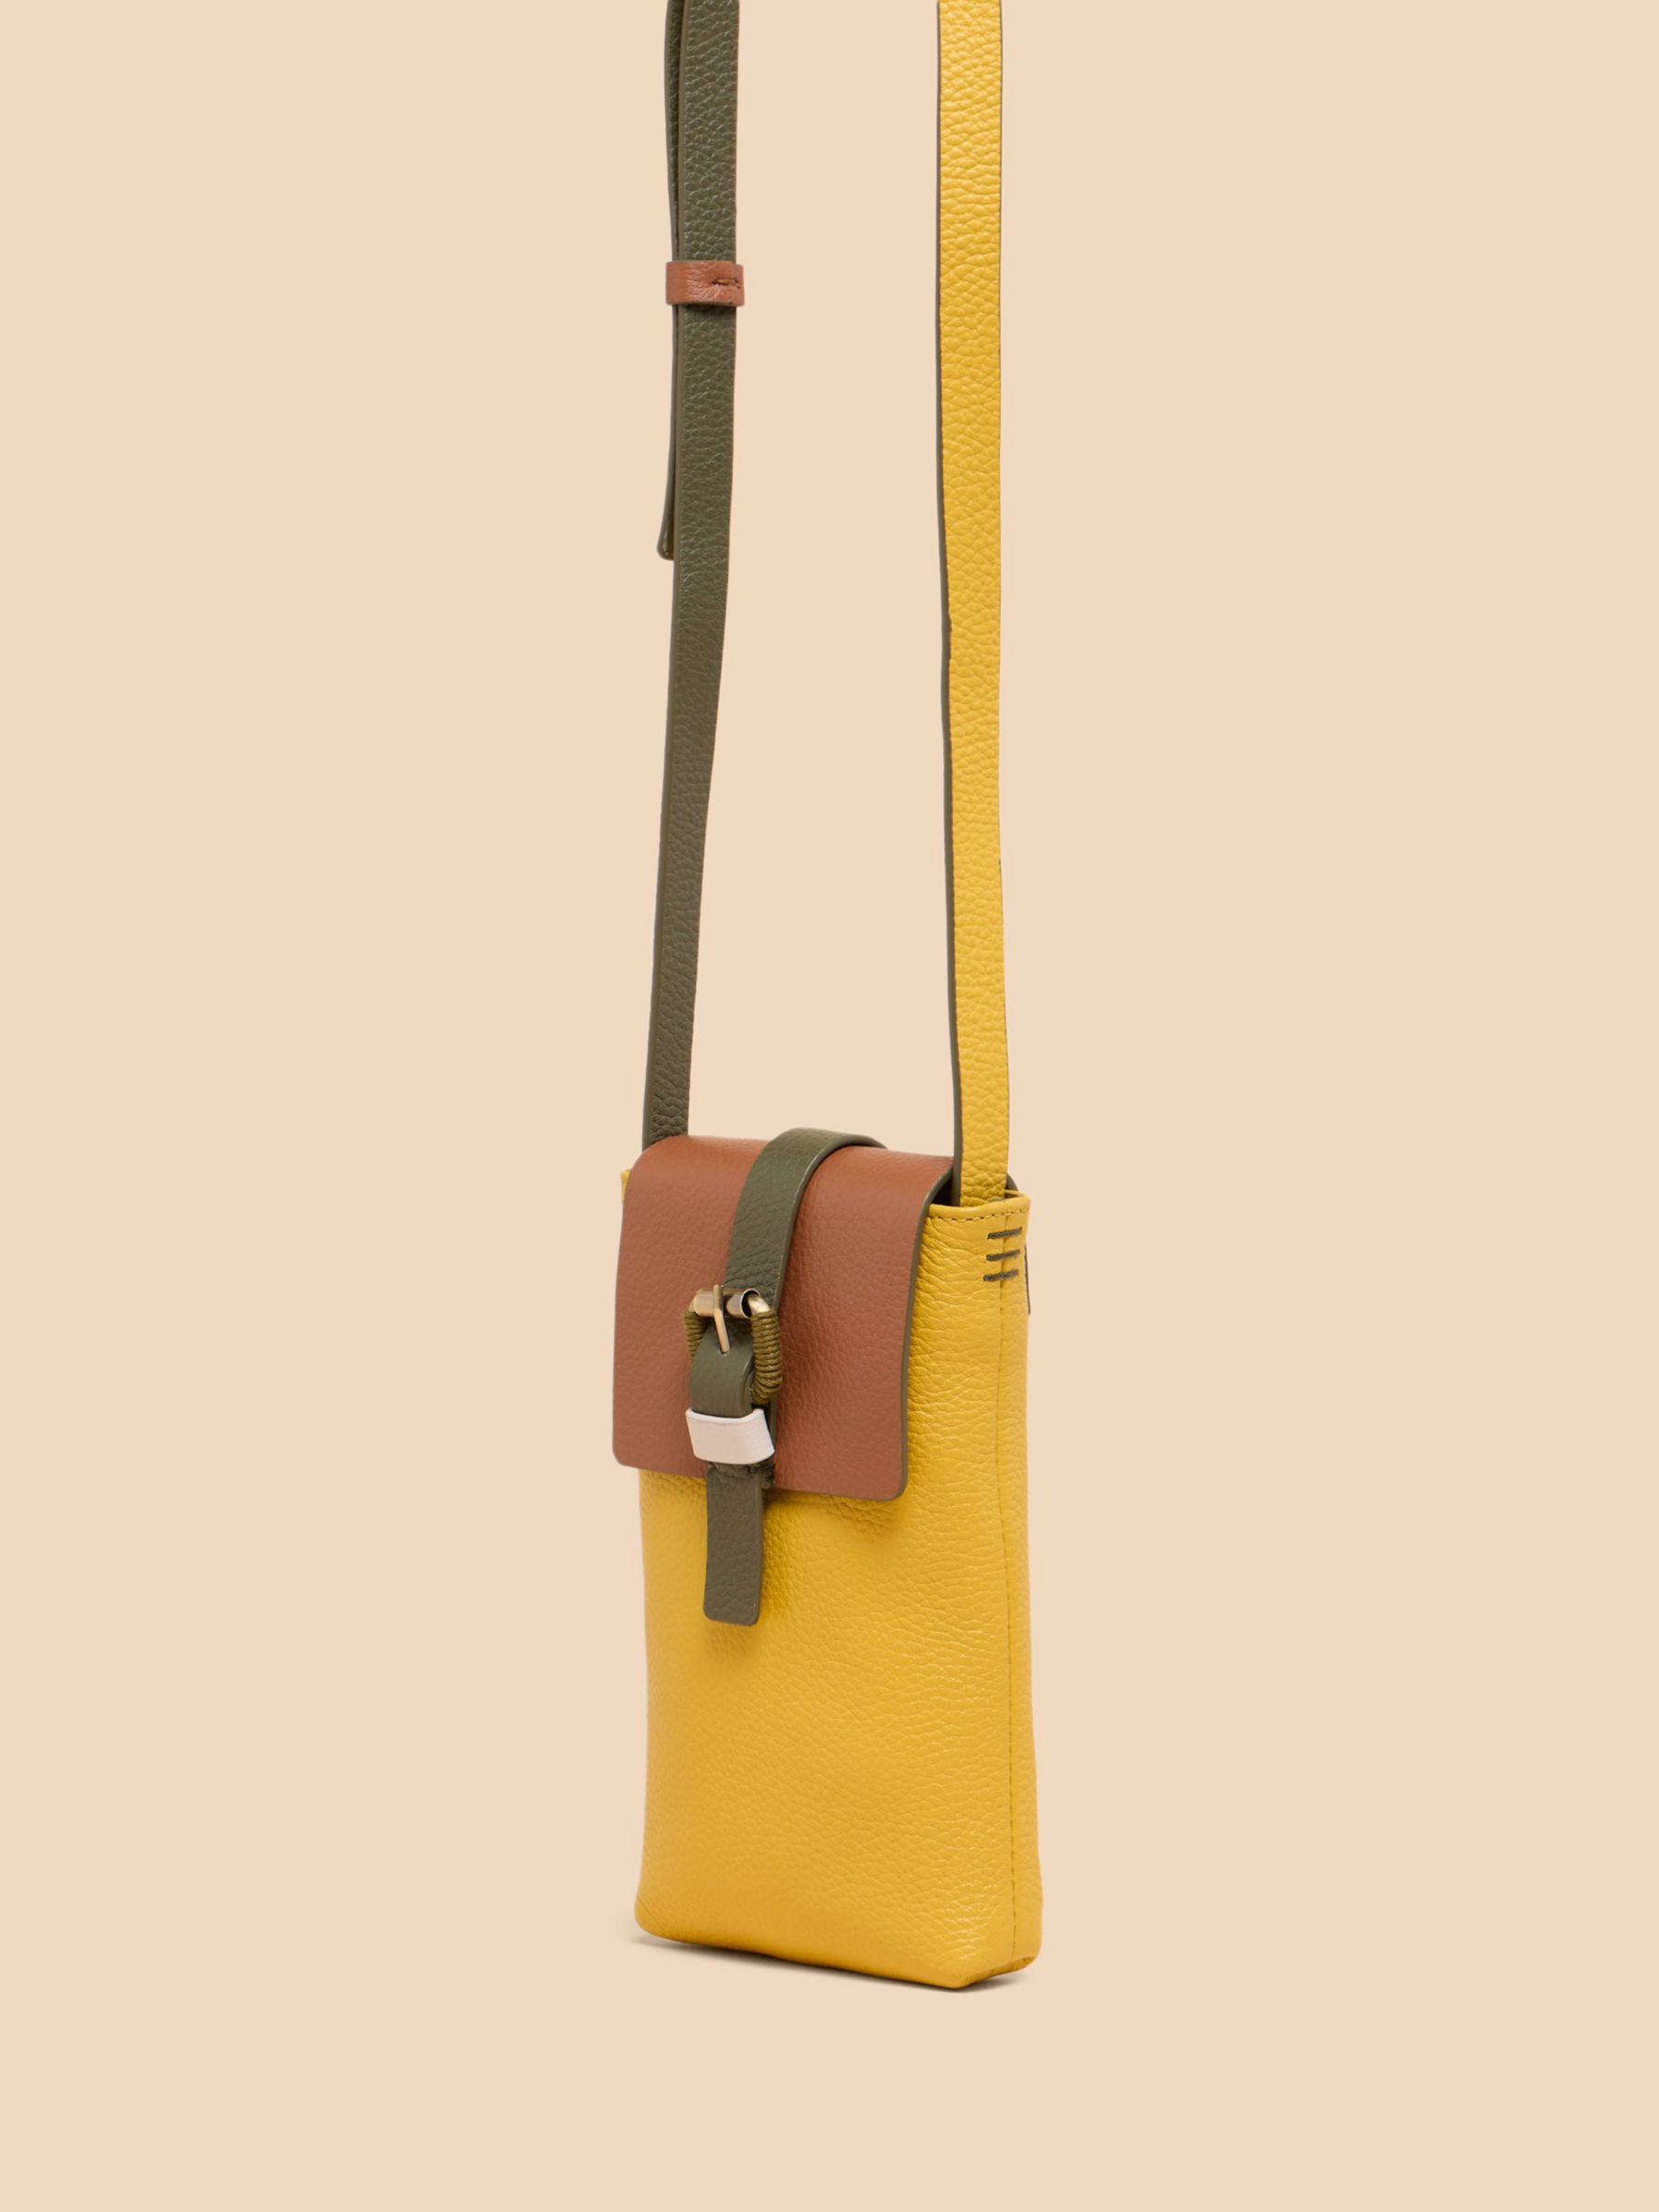 White Stuff Leather Phone Bag, Yellow/Multi, One Size